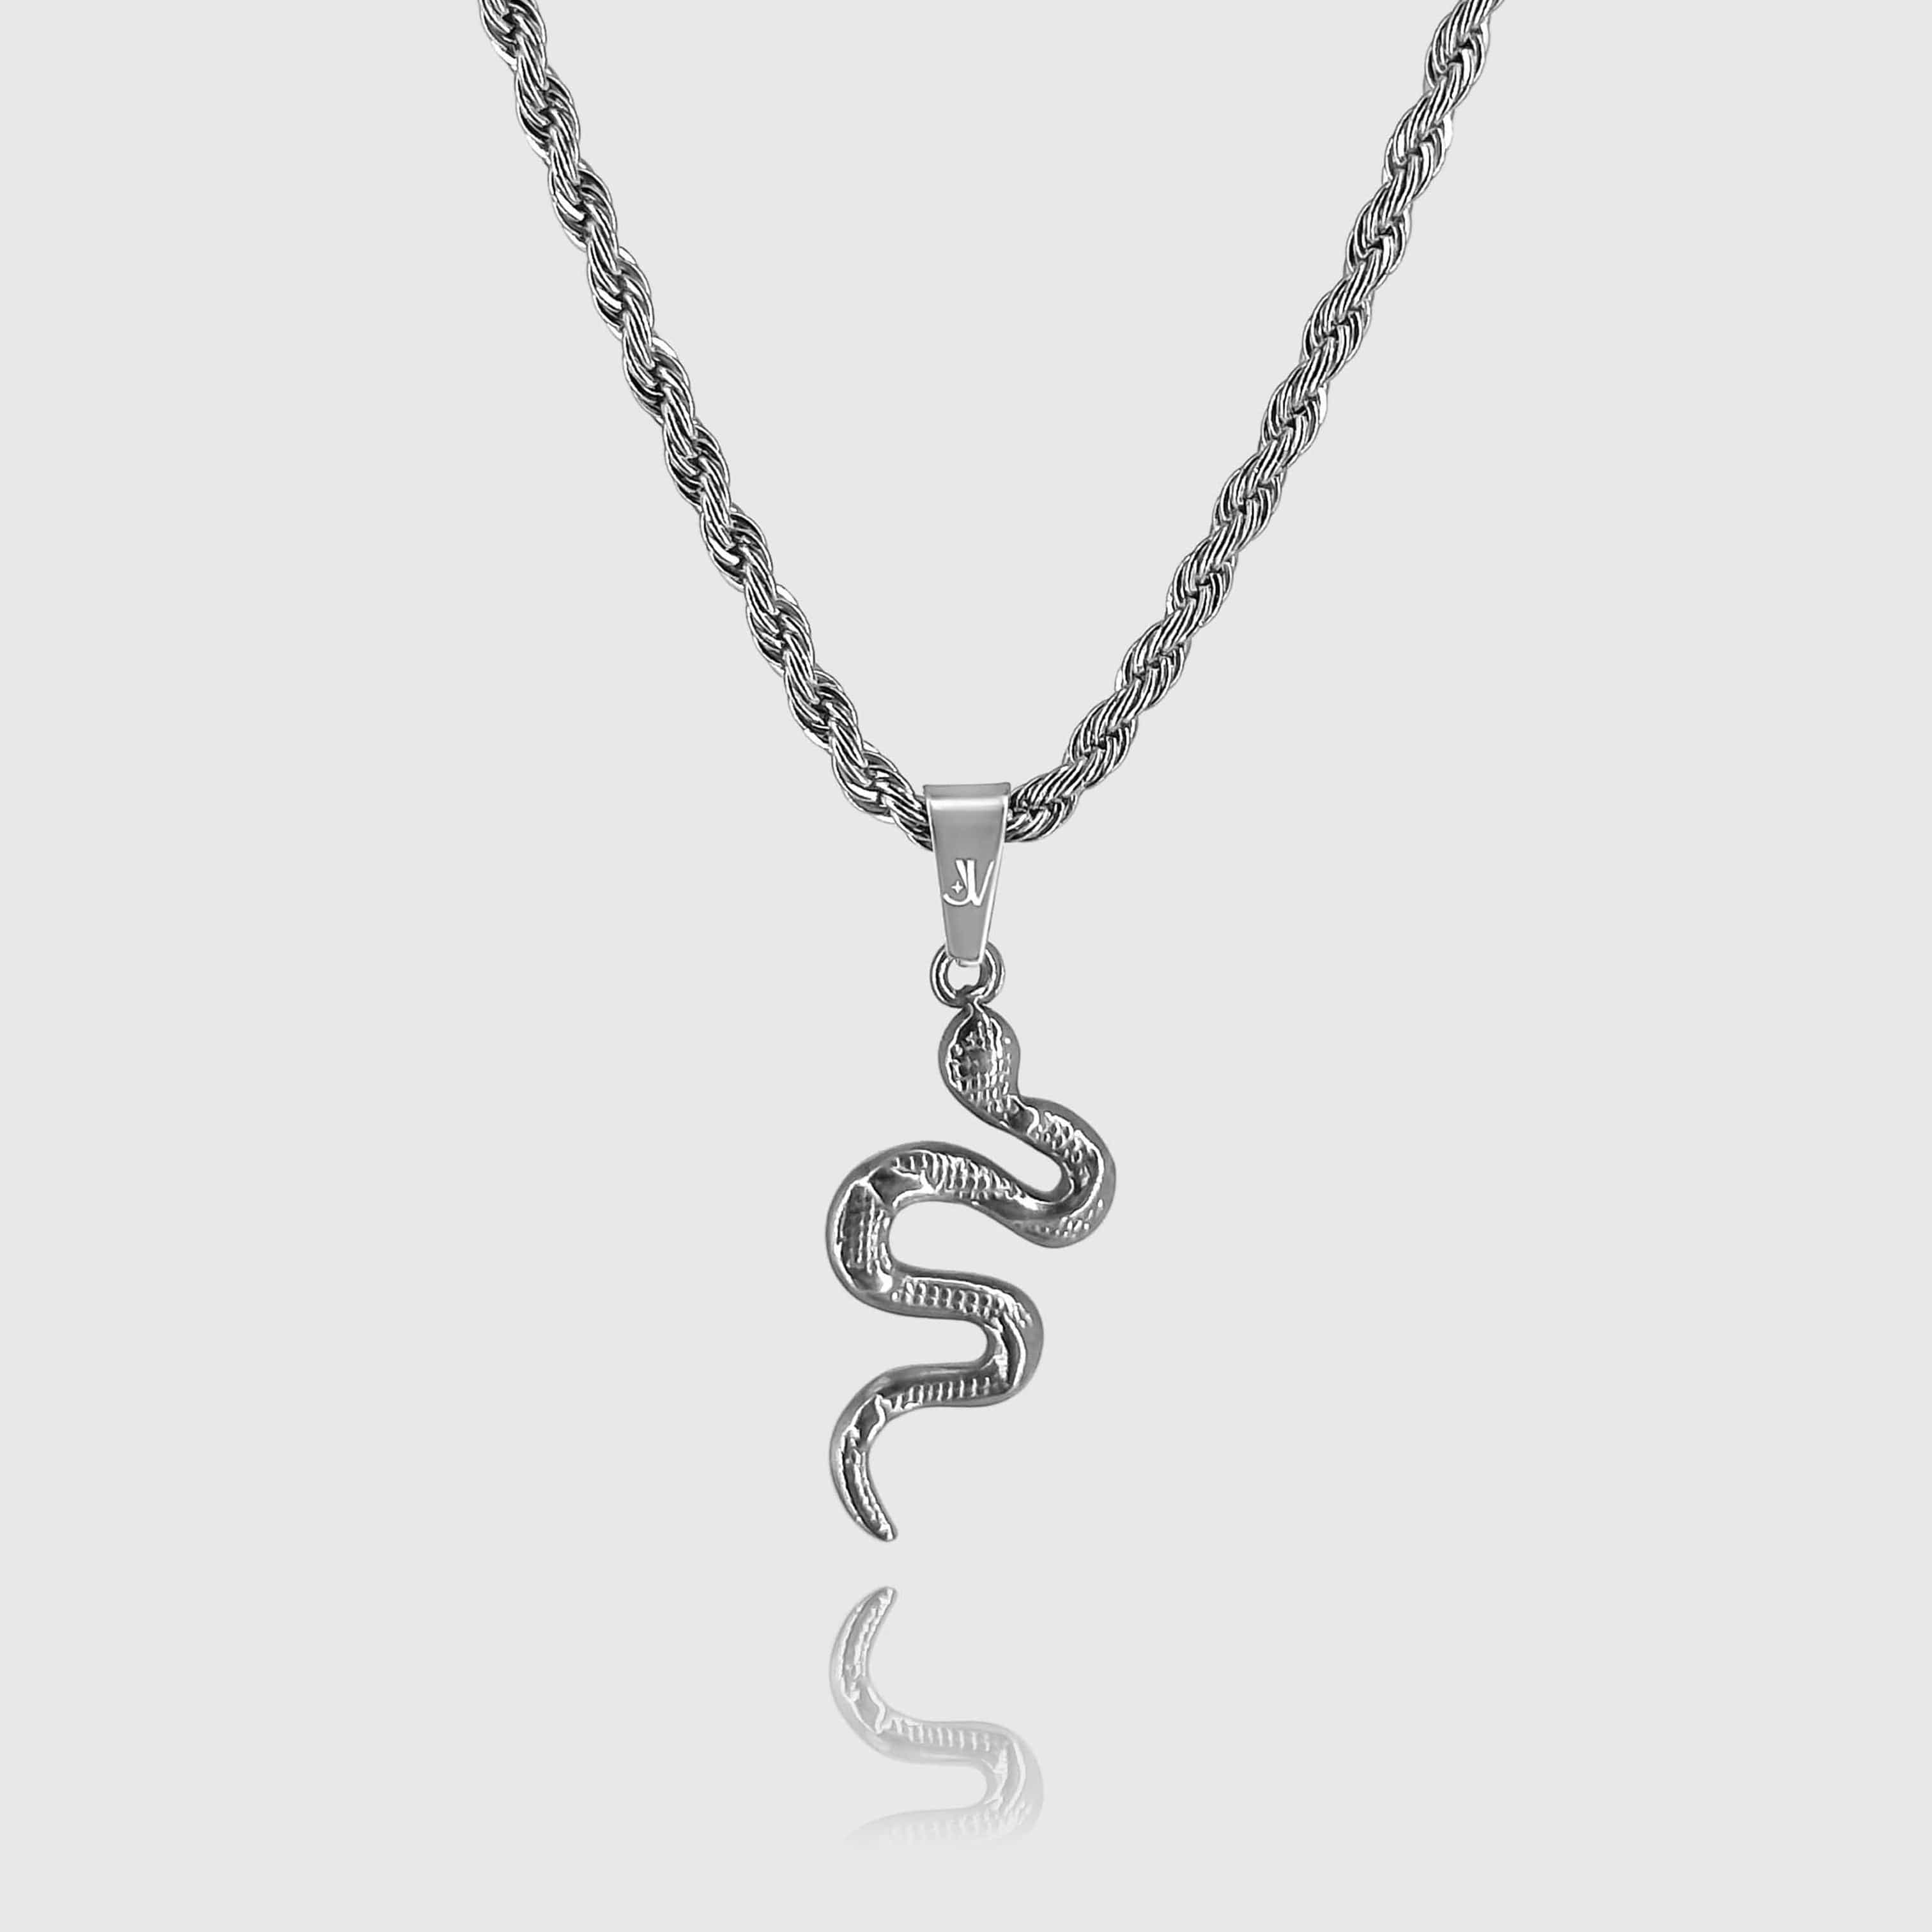 Viper Rope Chain - Silver (3mm) Chain with Pendant JVILLION